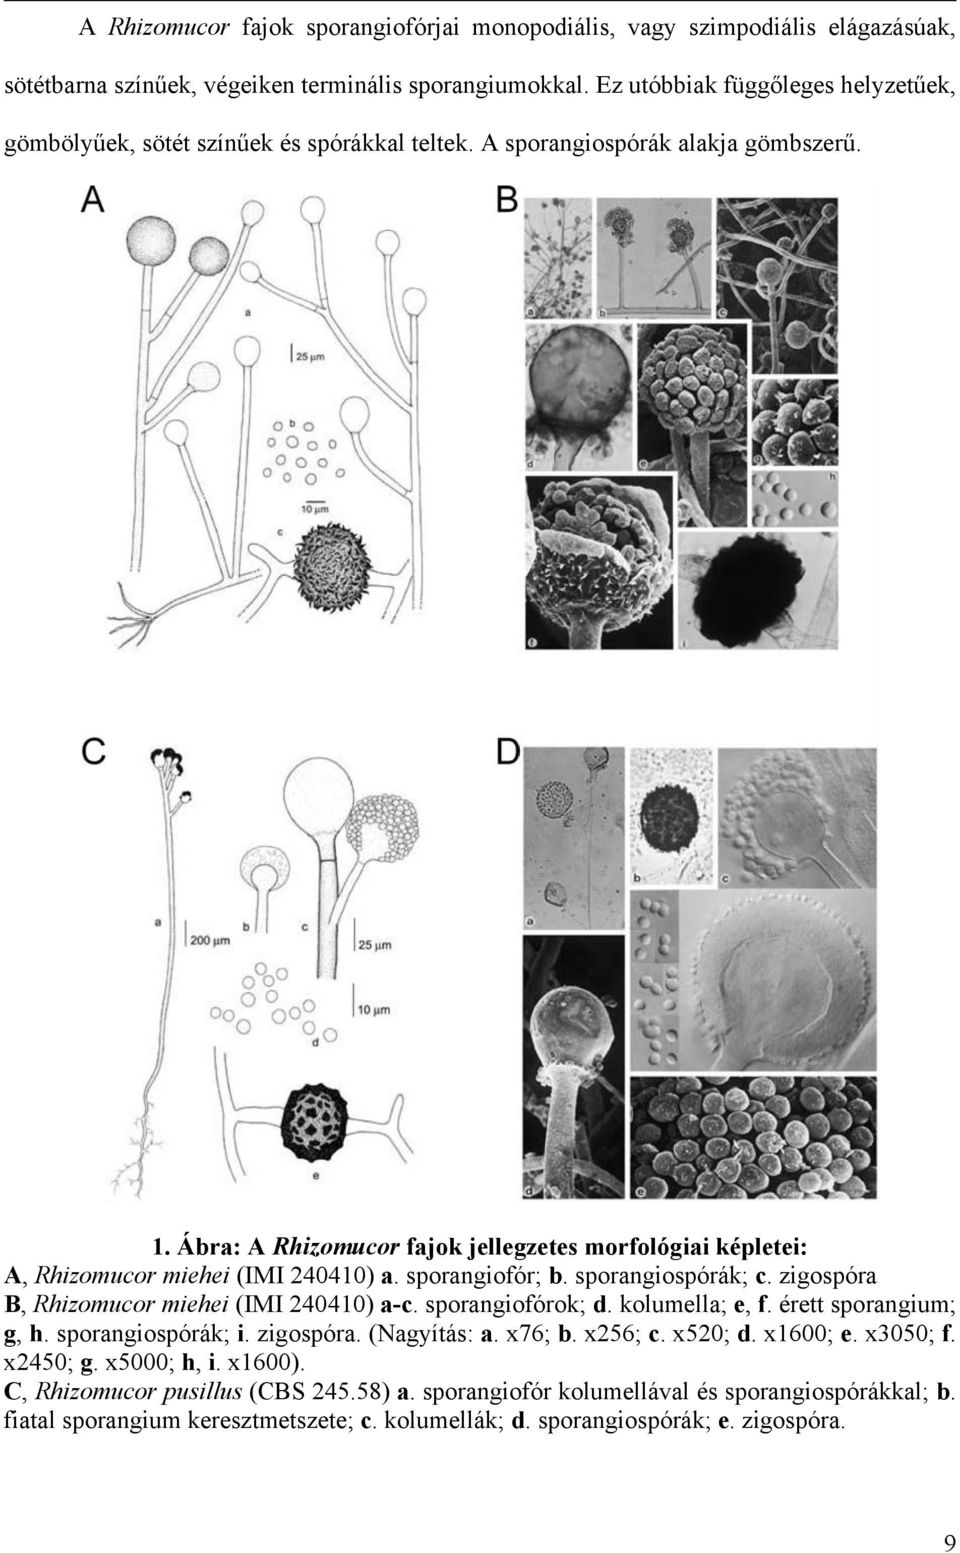 Ábra: A Rhizomucor fajok jellegzetes morfológiai képletei: A, Rhizomucor miehei (IMI 240410) a. sporangiofór; b. sporangiospórák; c. zigospóra B, Rhizomucor miehei (IMI 240410) a-c. sporangiofórok; d.